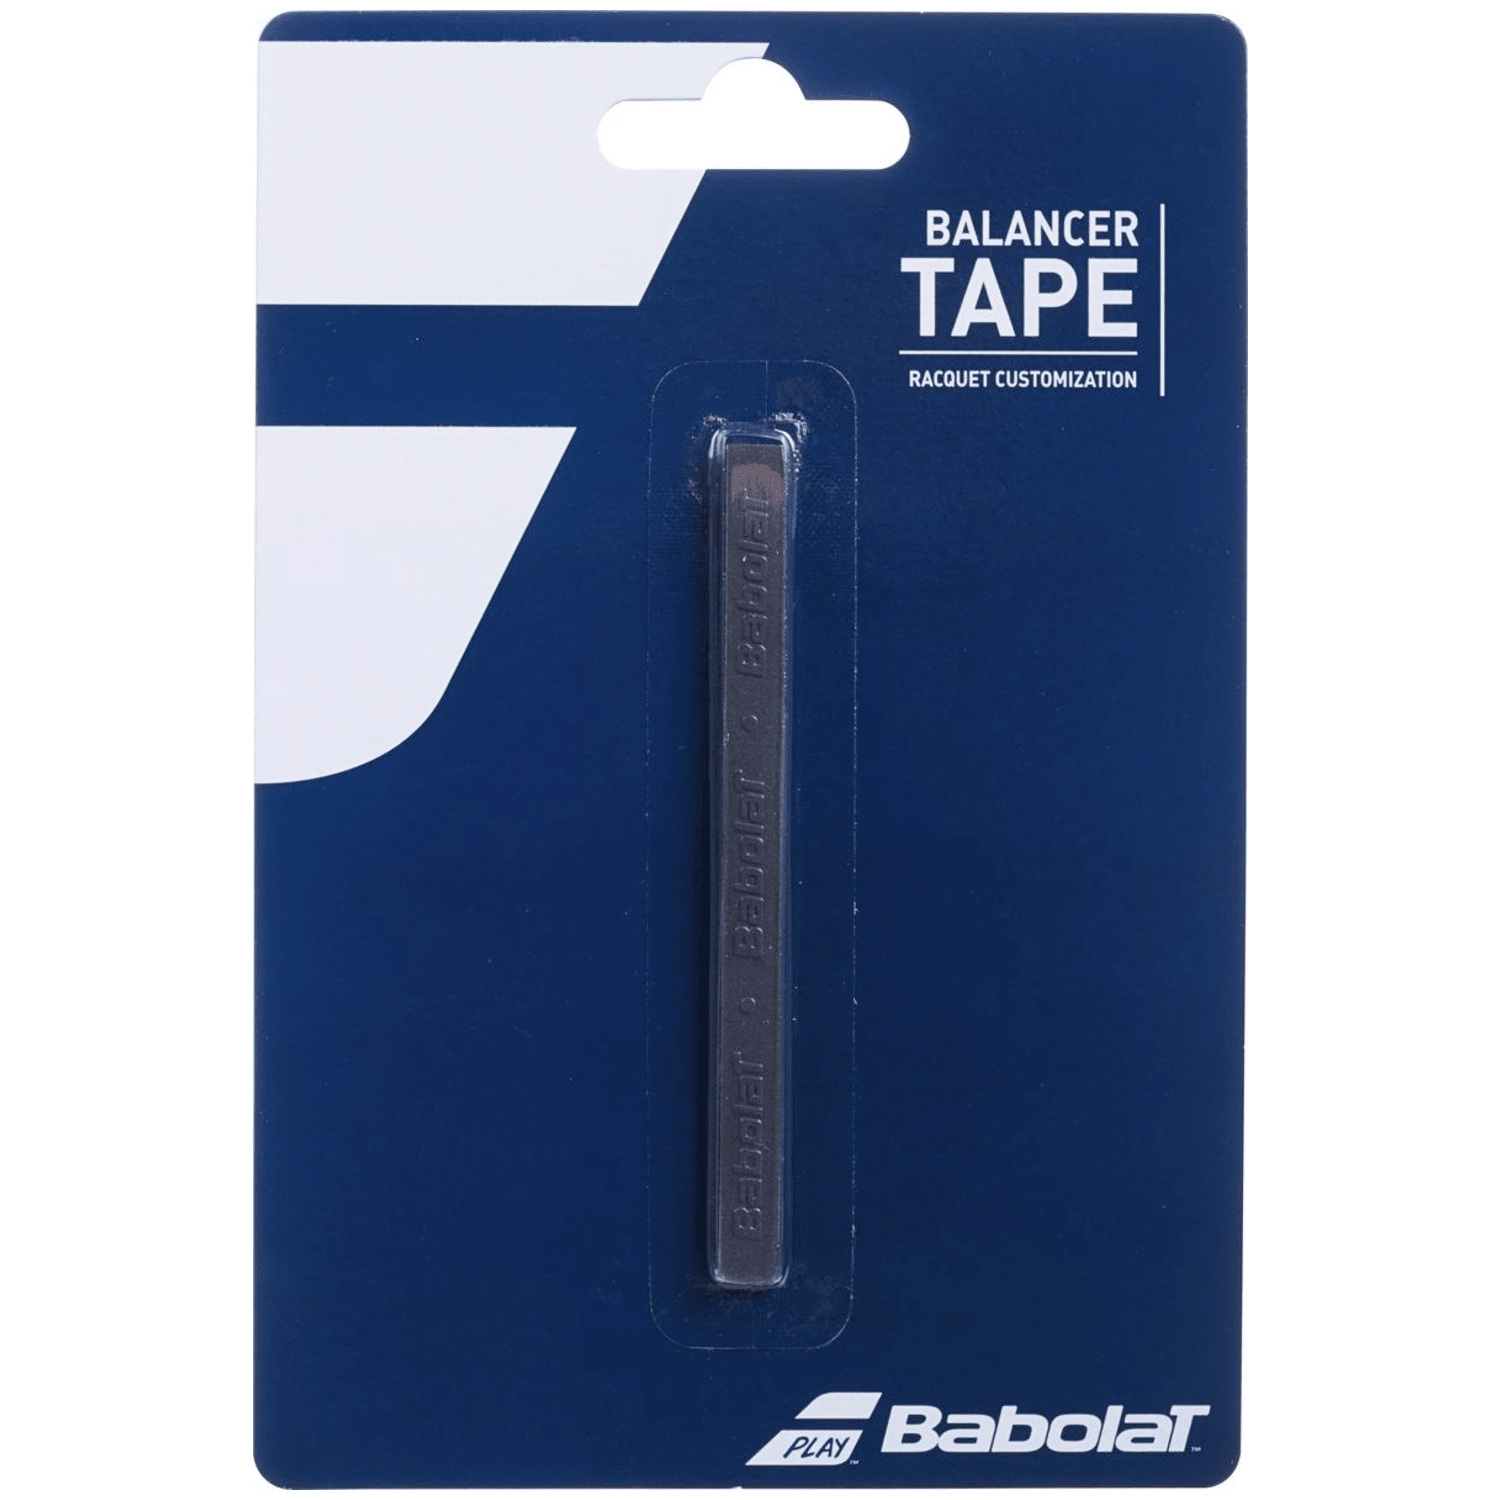 Babolat Balancer tape 3*3 Zubehör